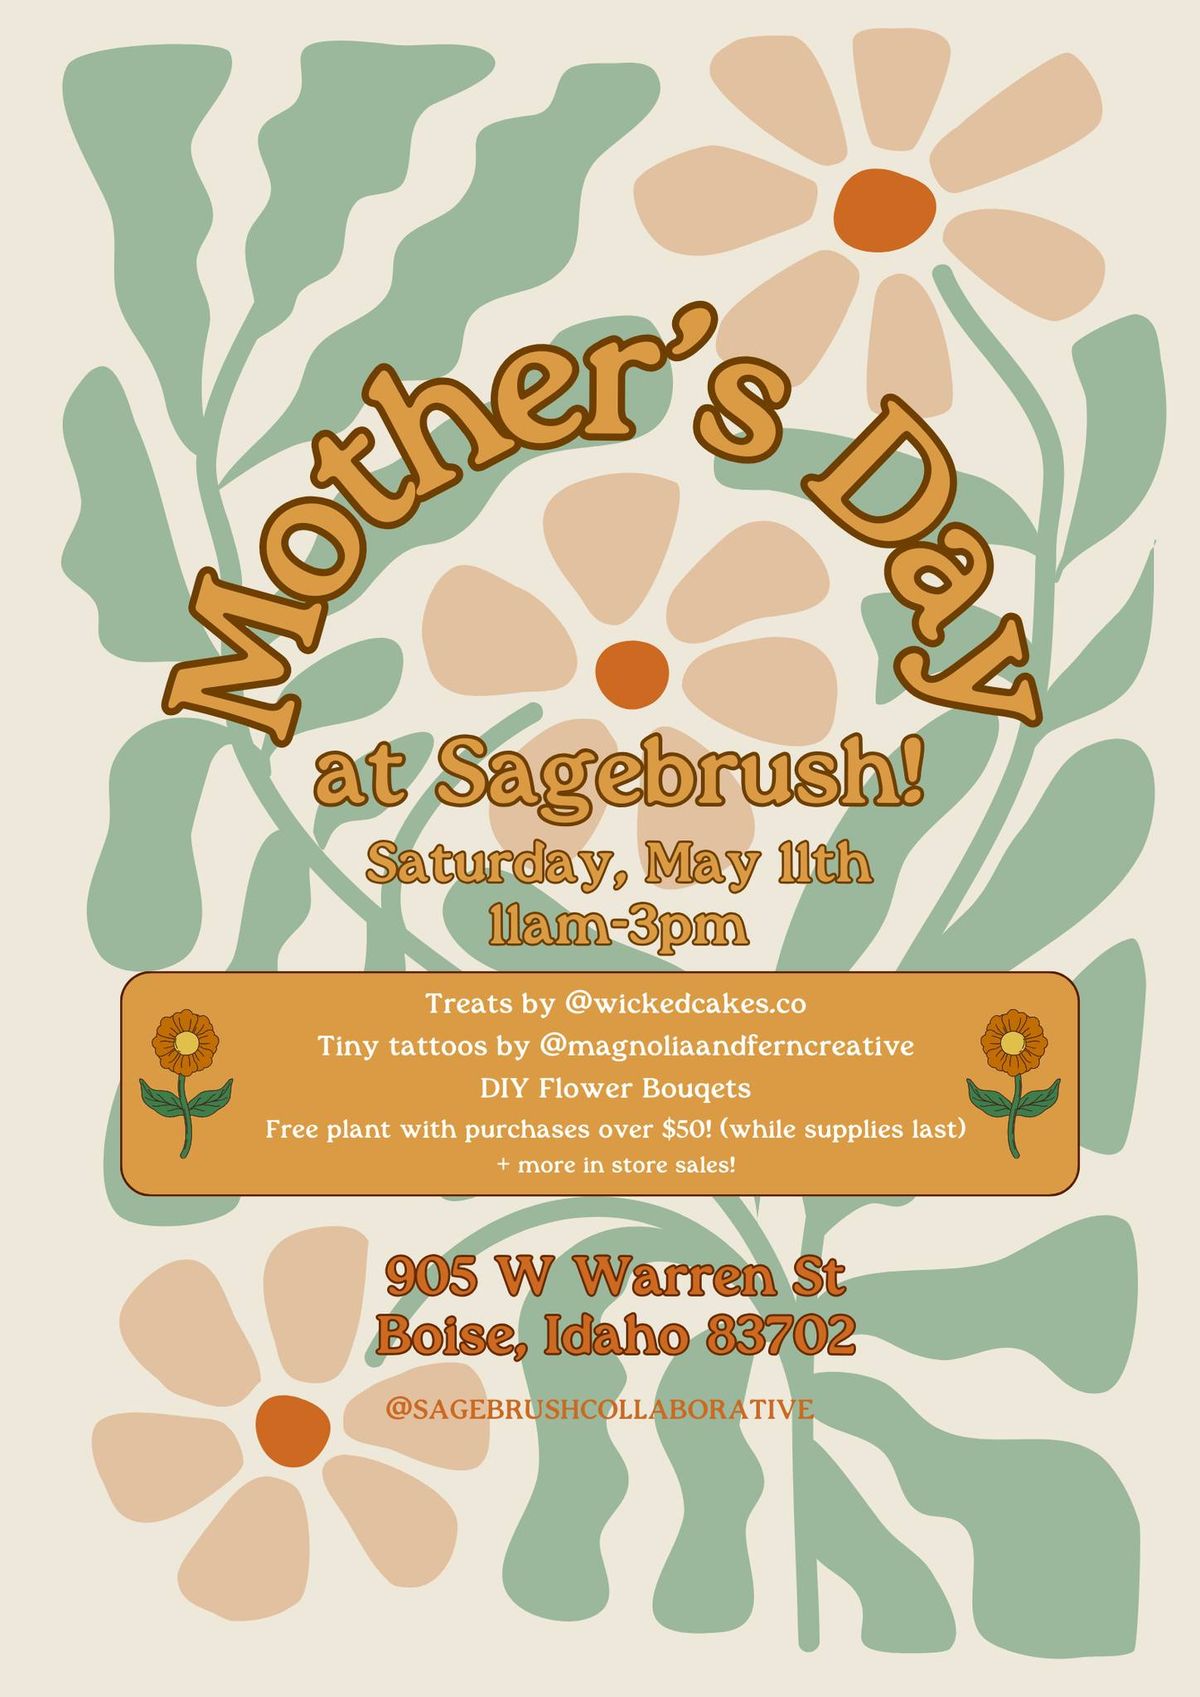 Mother's Day Pop Up @ Sagebrush!